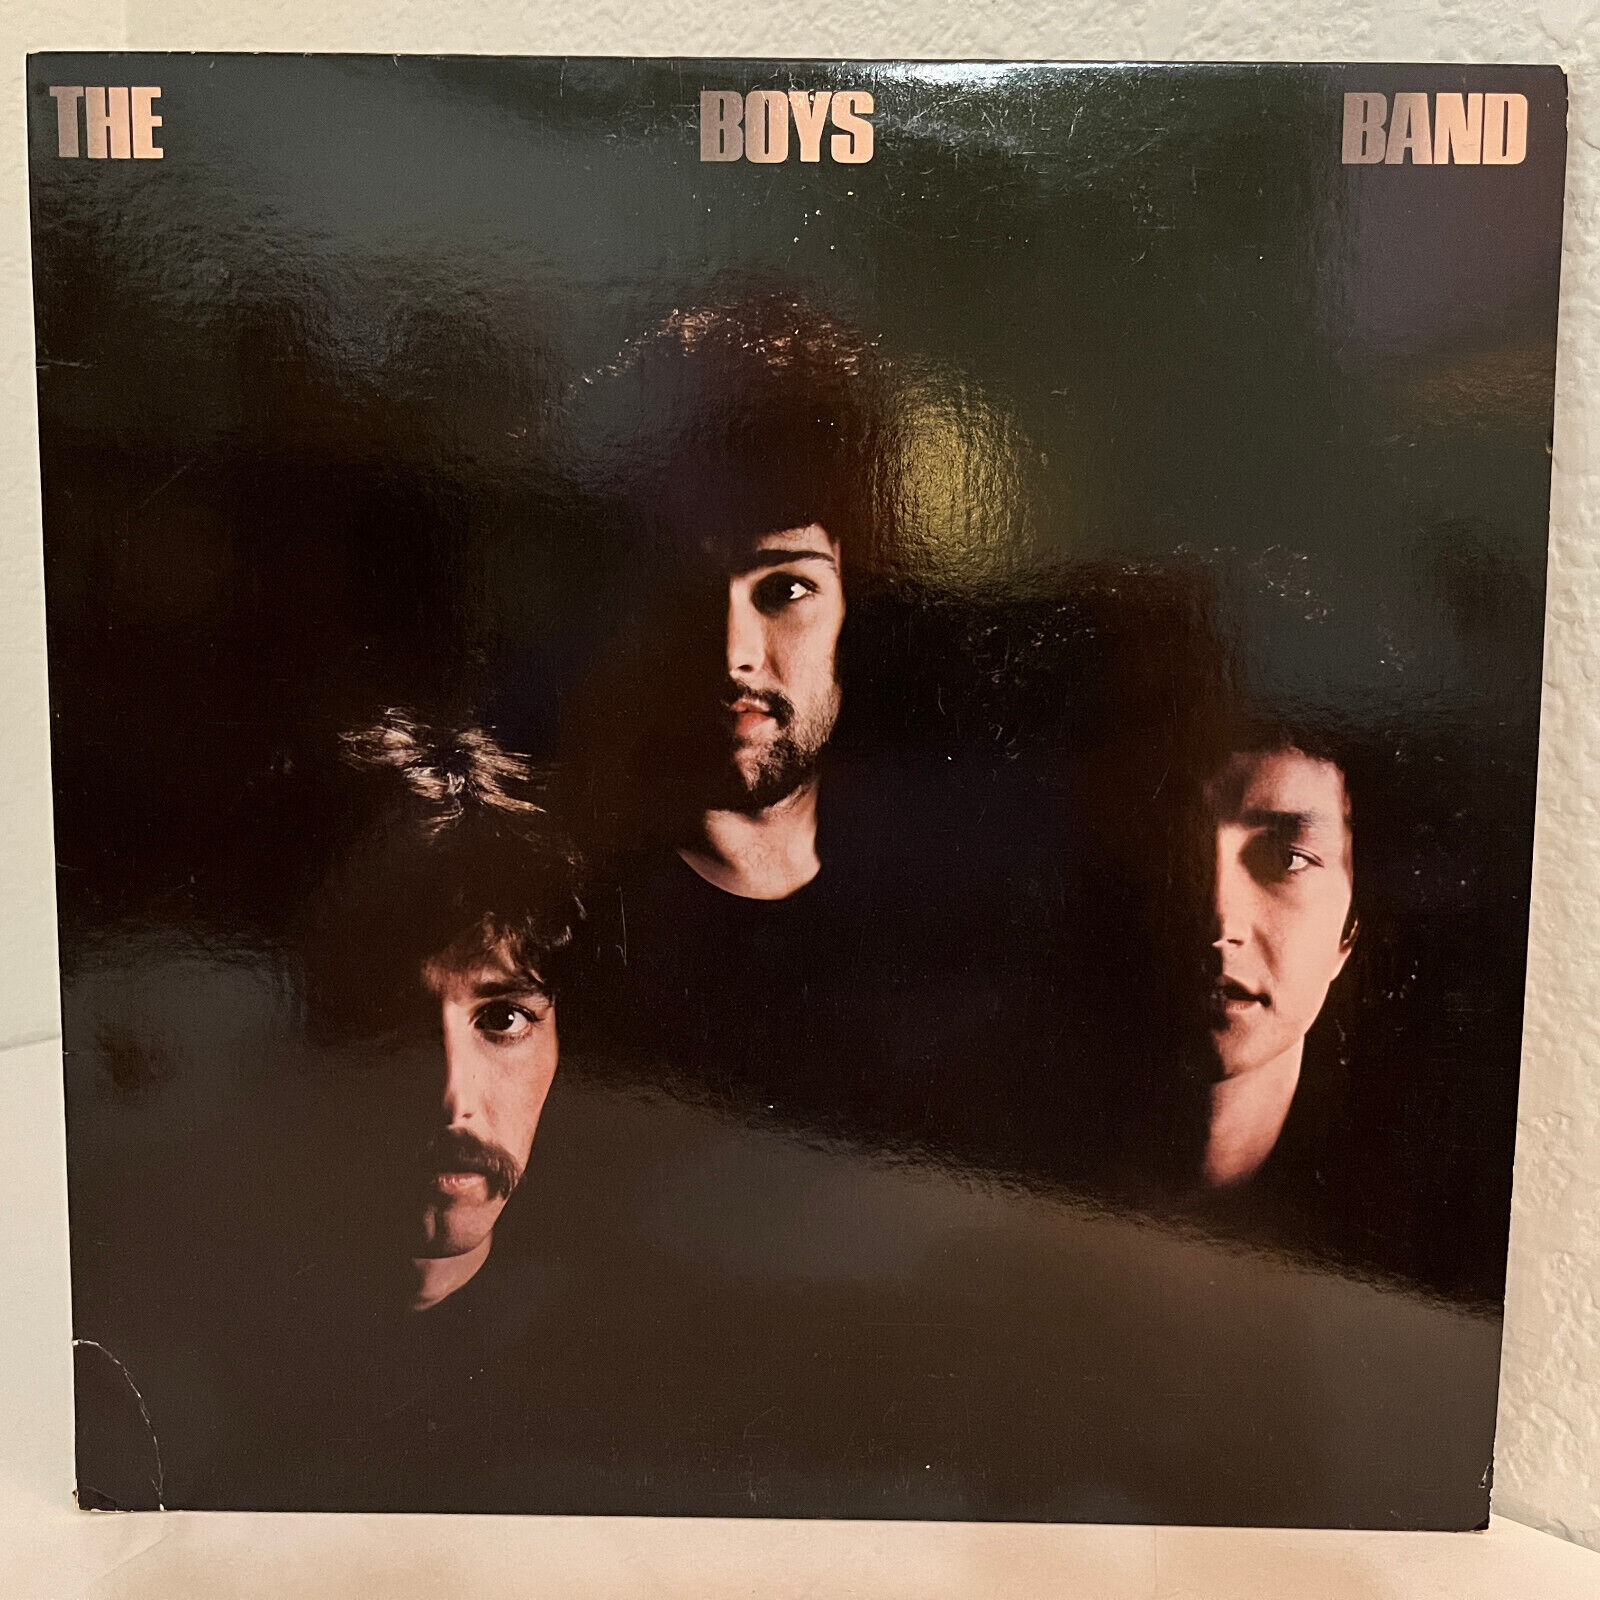 THE BOYS BAND - Self Titled (Promo) - 12" Vinyl Record LP - EX